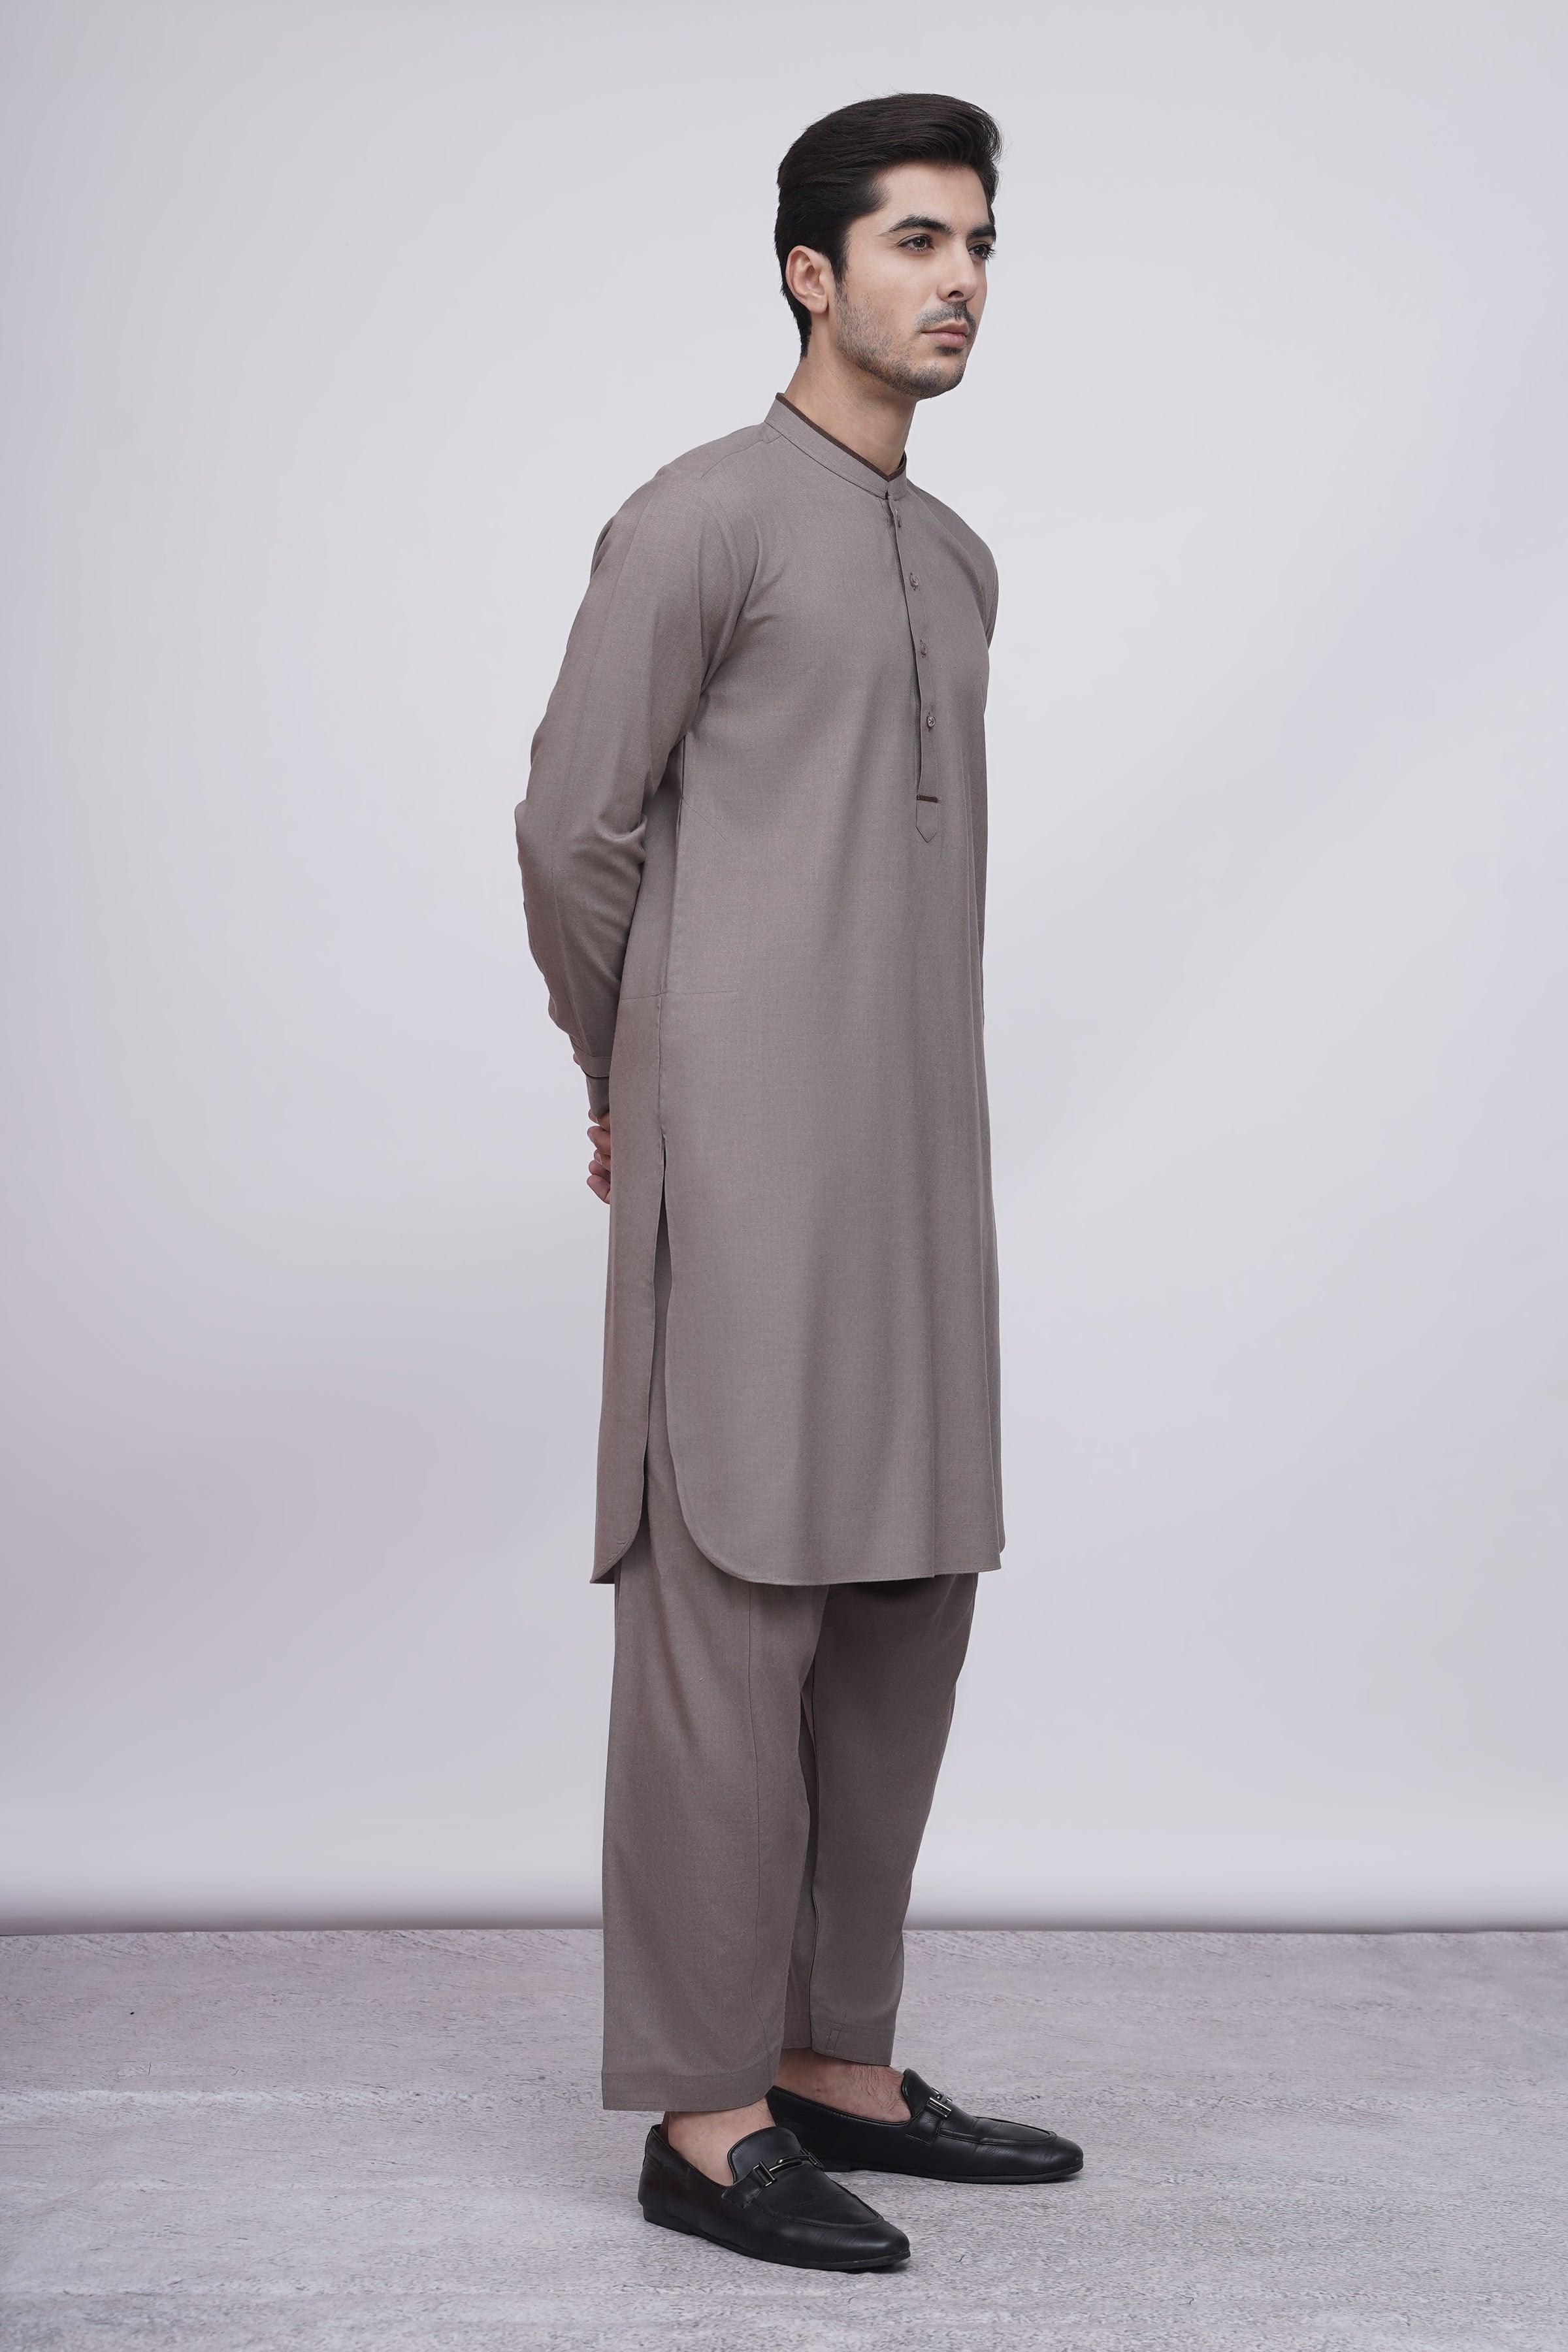 SHALWAR KAMEEZ KHAKI at Charcoal Clothing